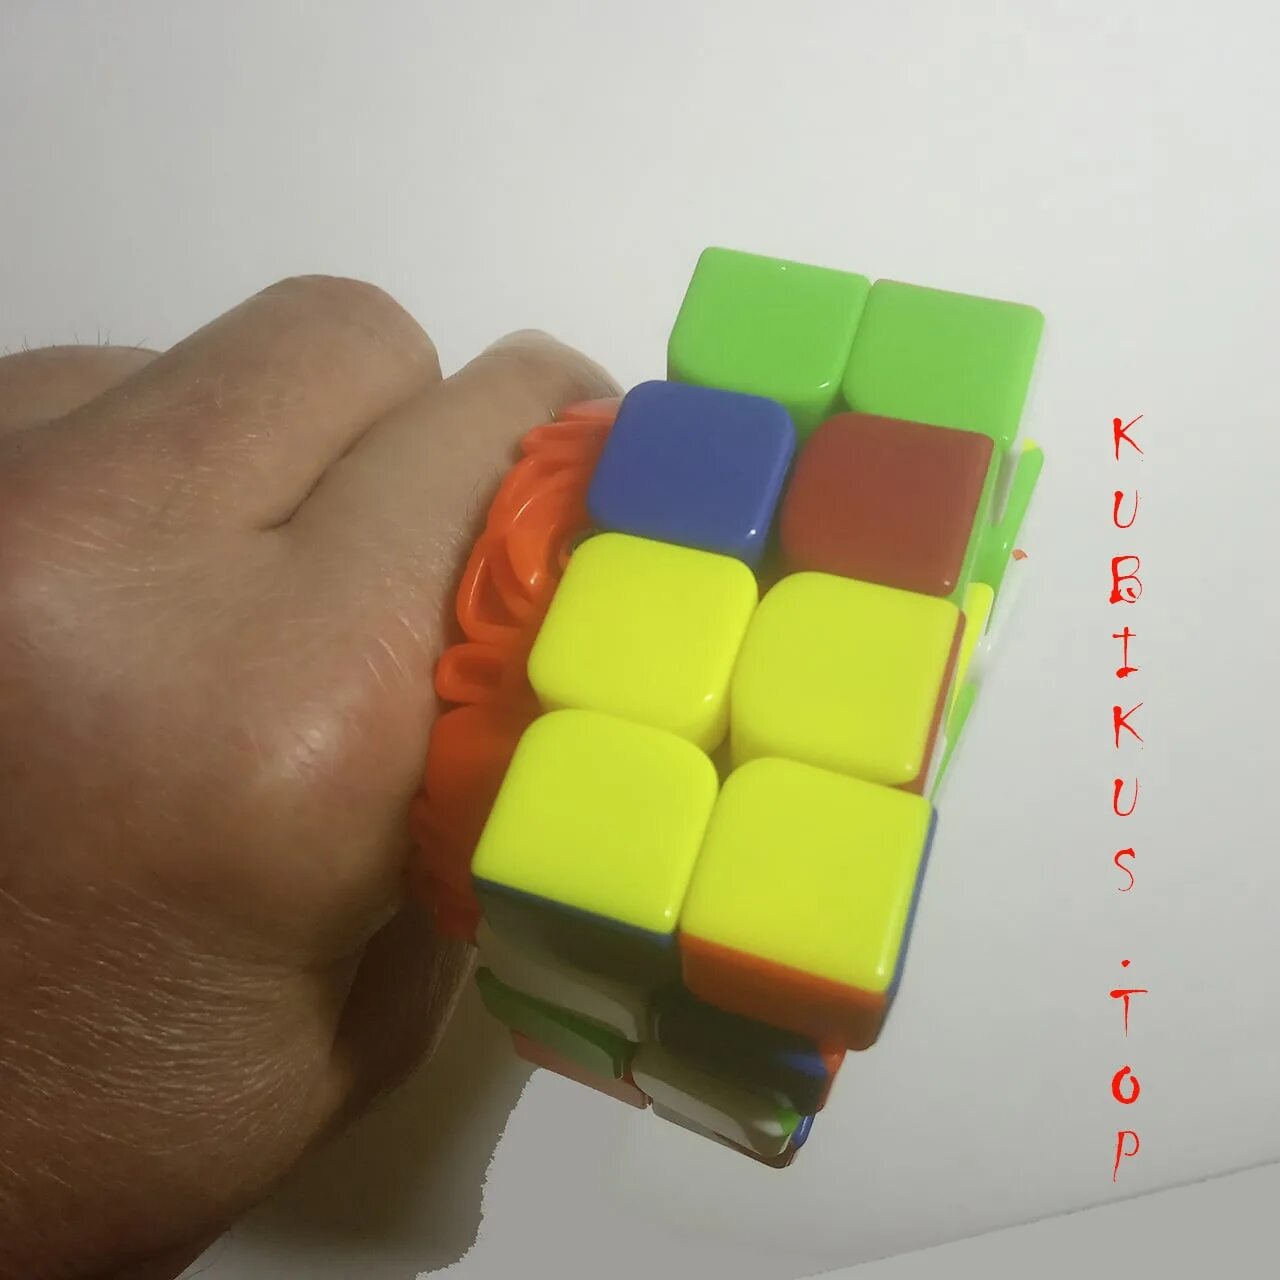 Рубик 4 4. Флип кубик Рубика 4на4. Кубик 4 на 4 сборка. Кубик рубик 4x4 Паритет пл. Кубик 4 на 4 паритеты.